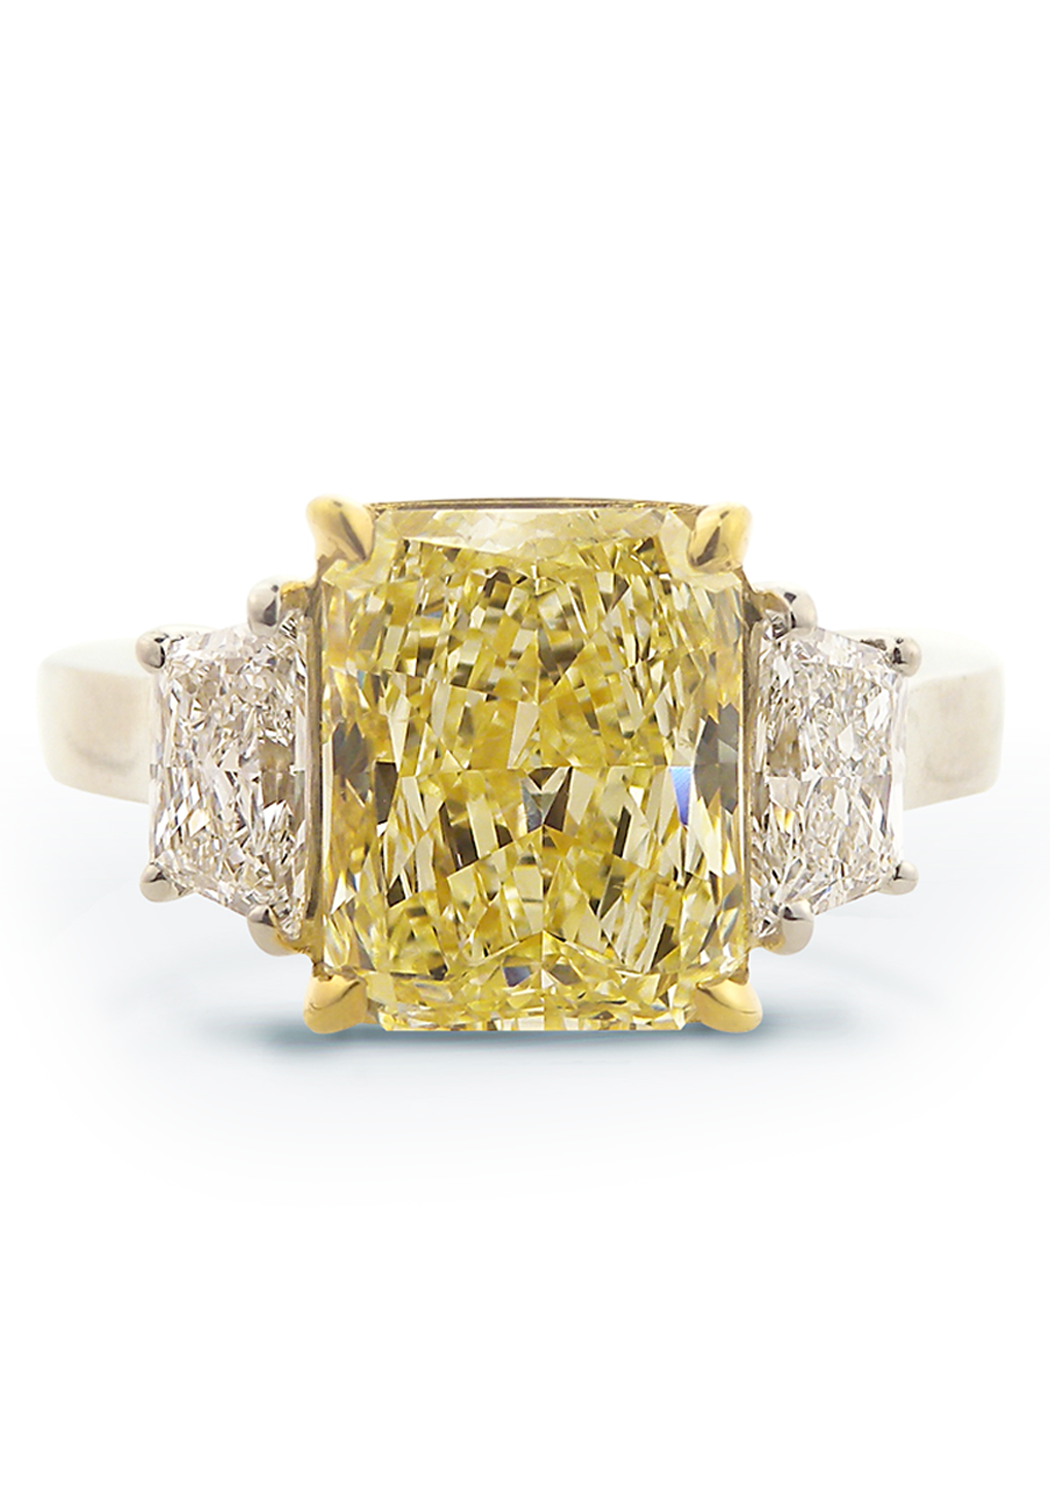 Louis Glick 5-ct Fancy Yellow Starburst Diamond Ring | OsterJewelers.com